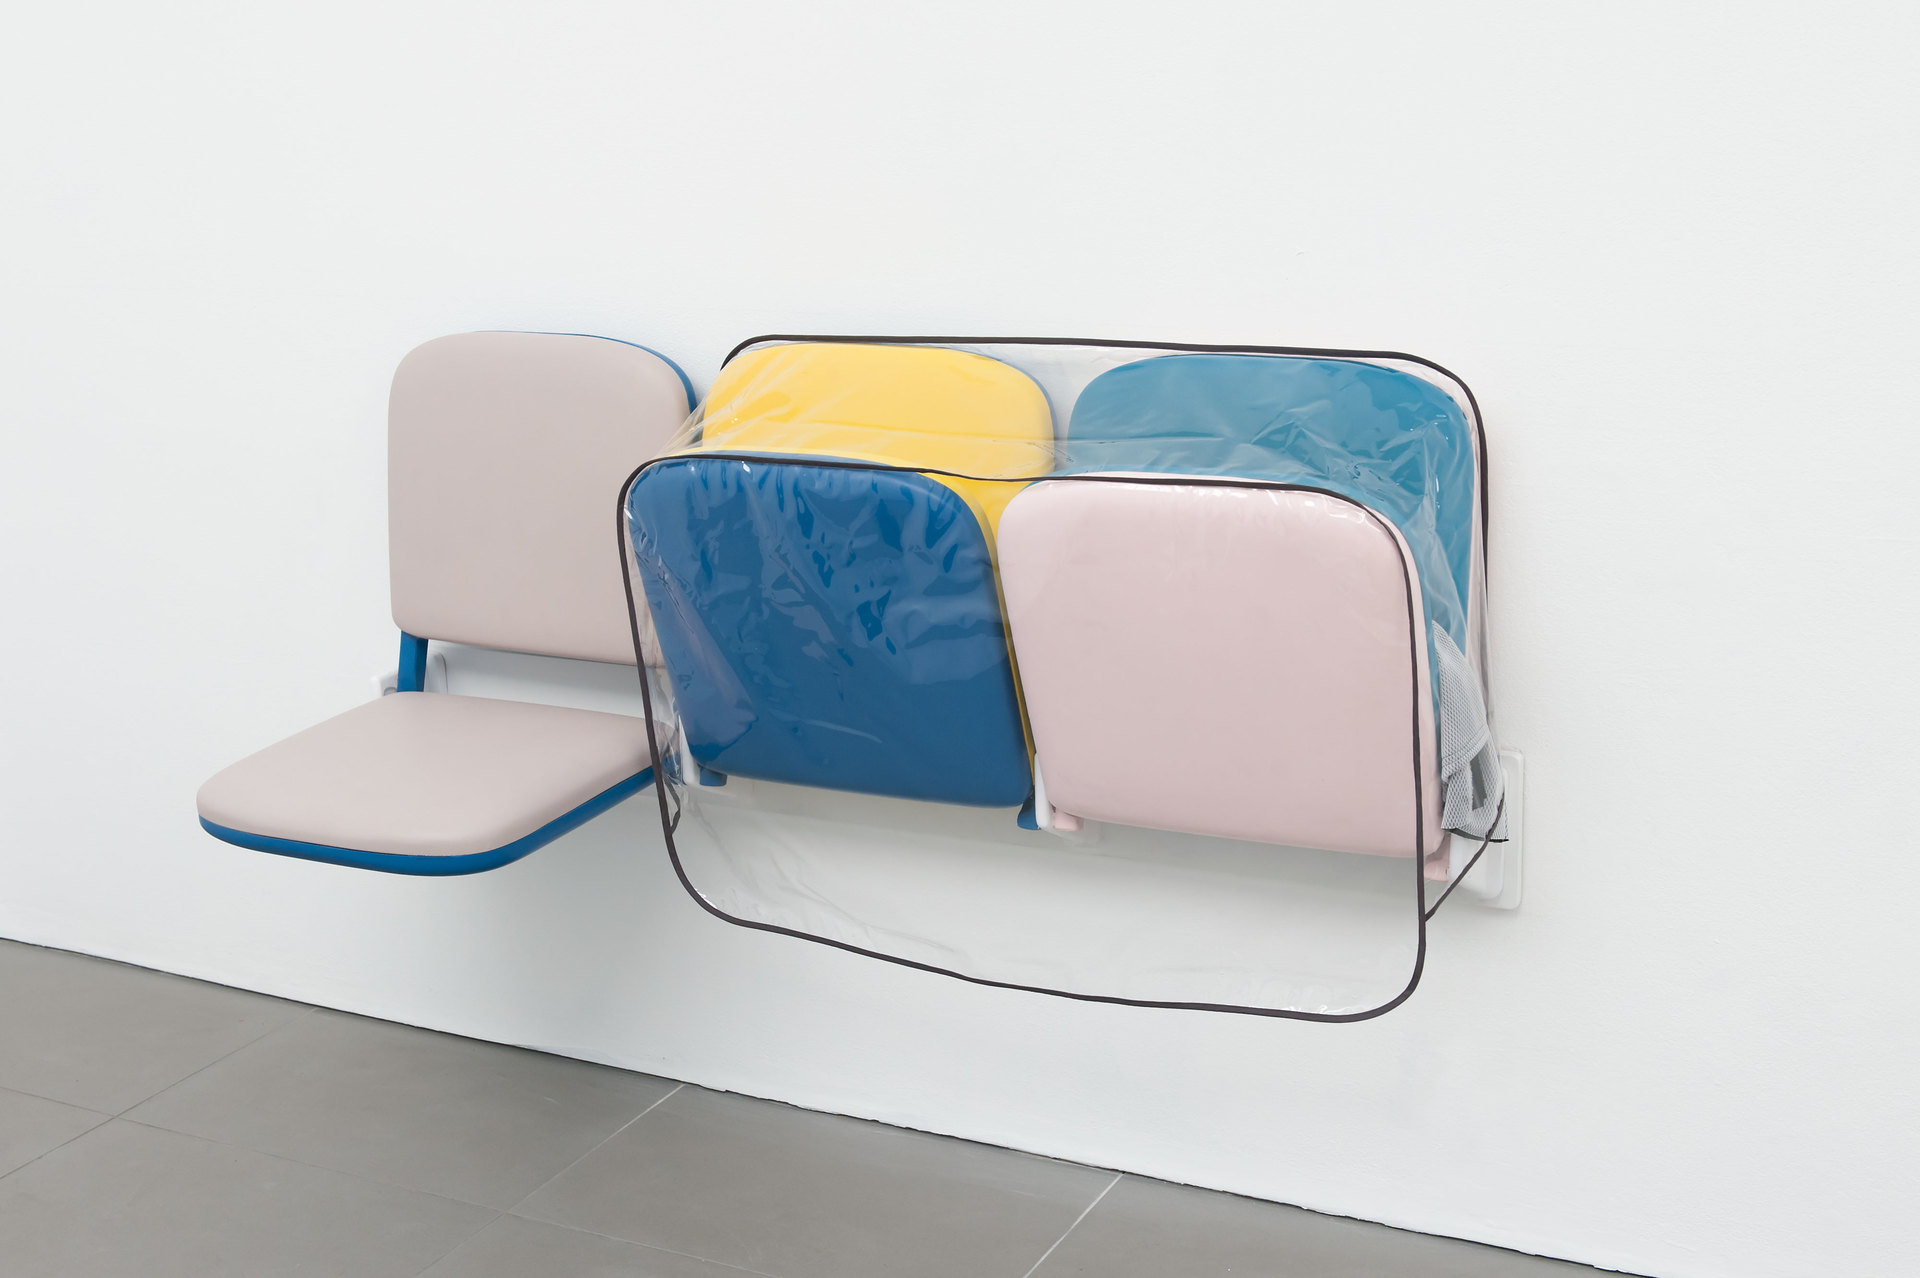  Magali Reus, Parking (Jogs), 2013, polyester resin, pigments, clear PVC, cotton, Airtex, 57 cm x 140 cm x 48 cm, Cell Project Space